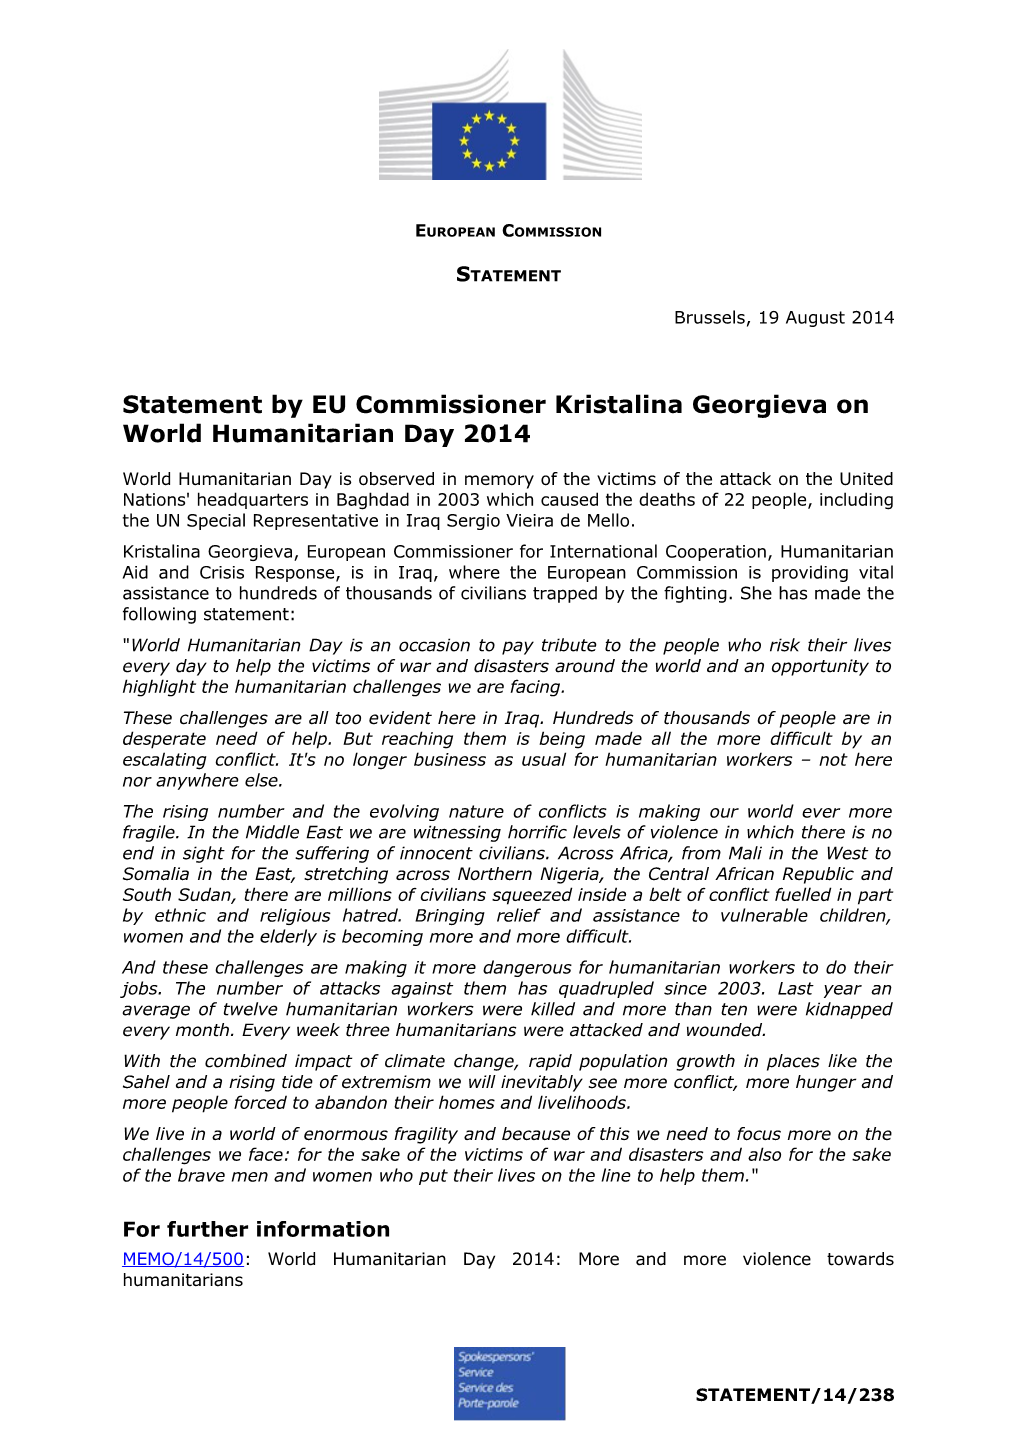 Statement by EU Commissioner Kristalina Georgieva on World Humanitarian Day 2014